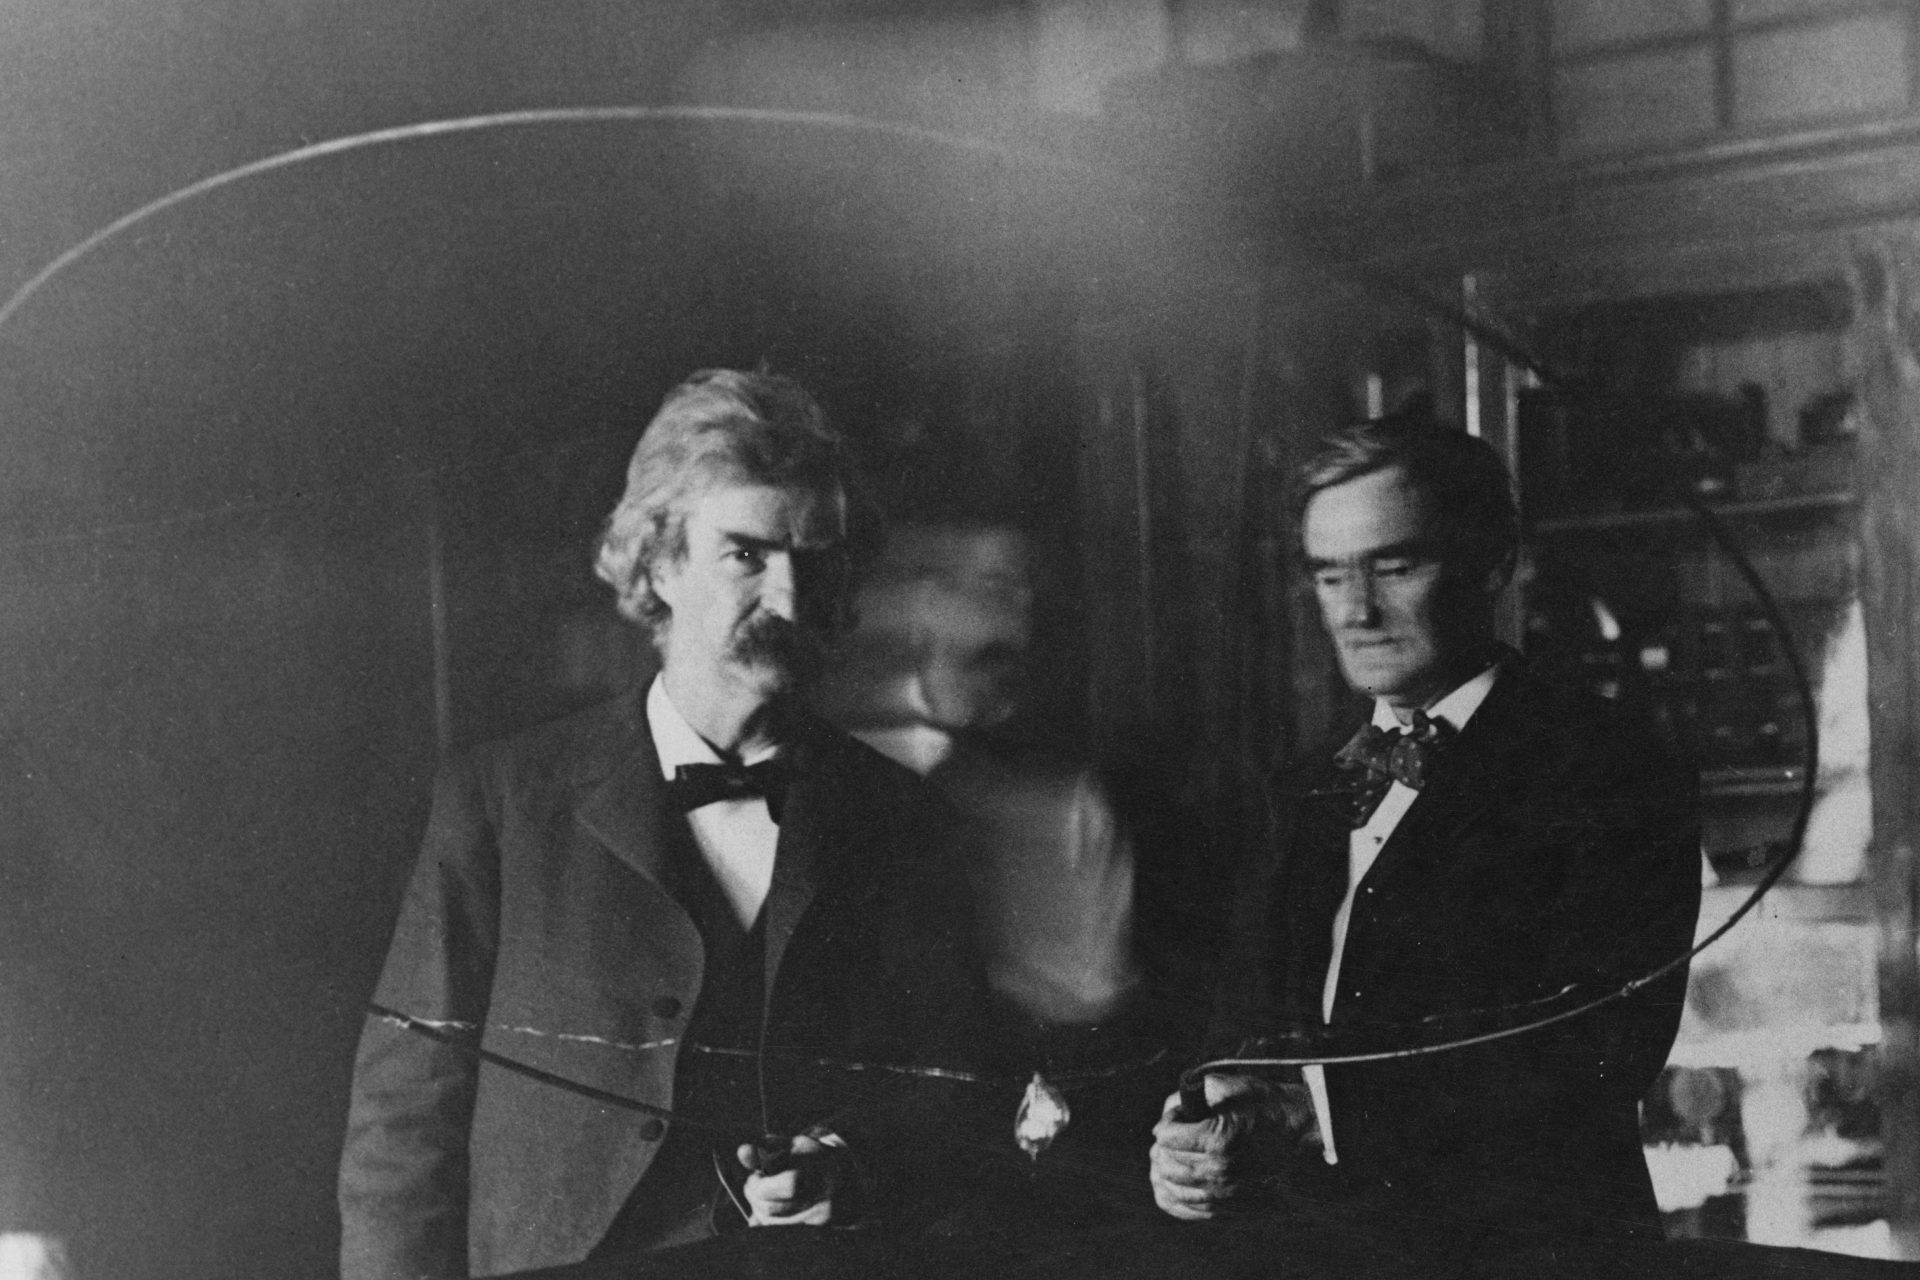 Tesla got Mark Twain to stand on his “earthquake machine”